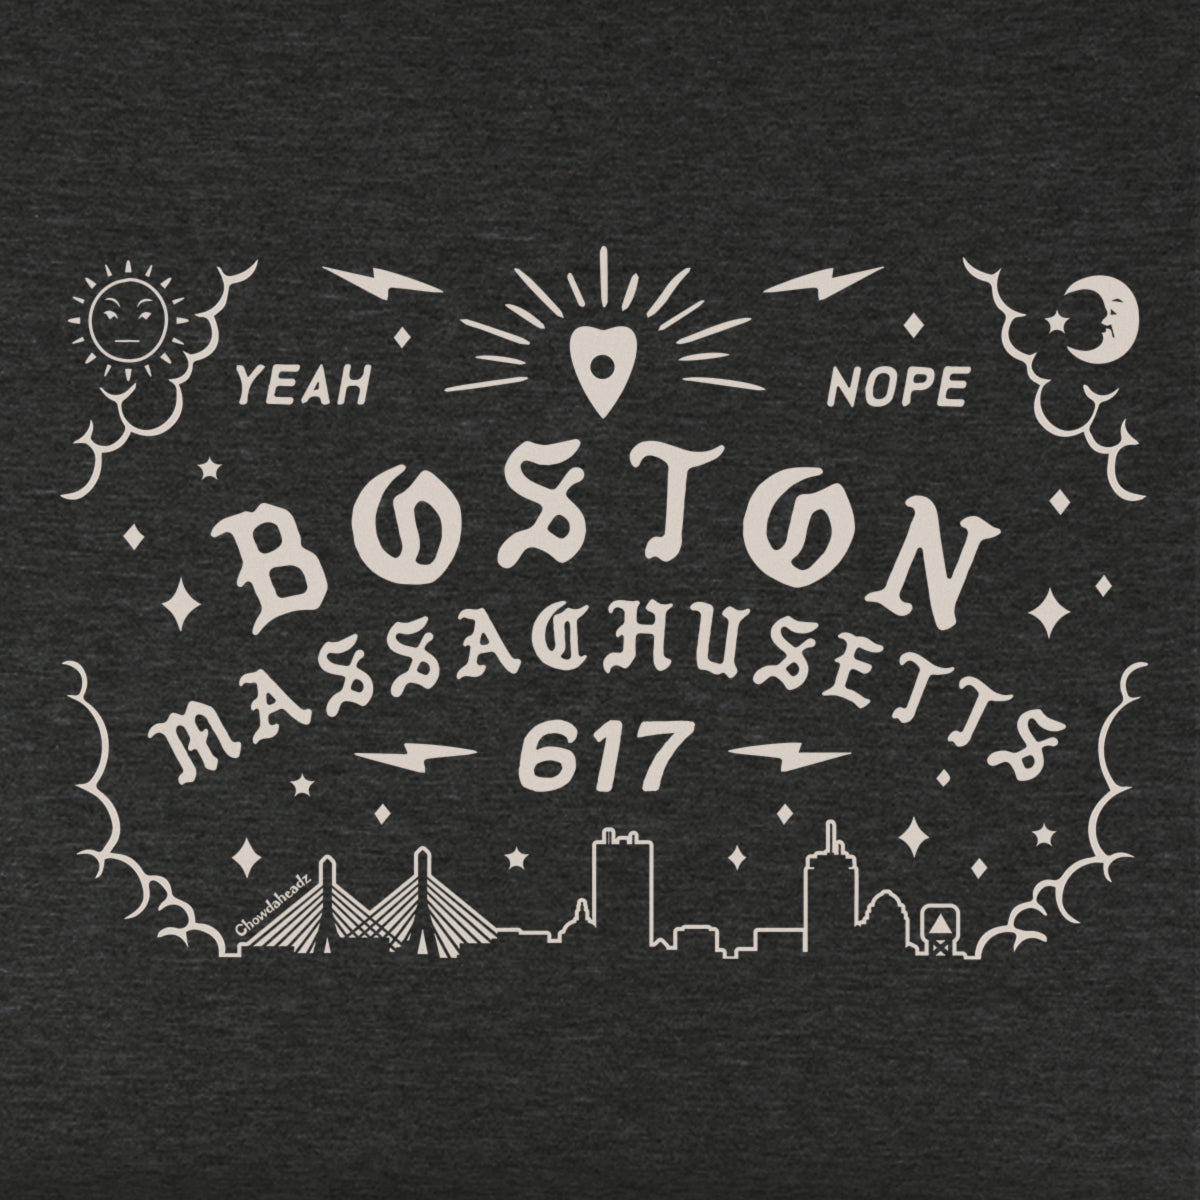 Boston Mass Spirit Board Youth T-Shirt - Chowdaheadz